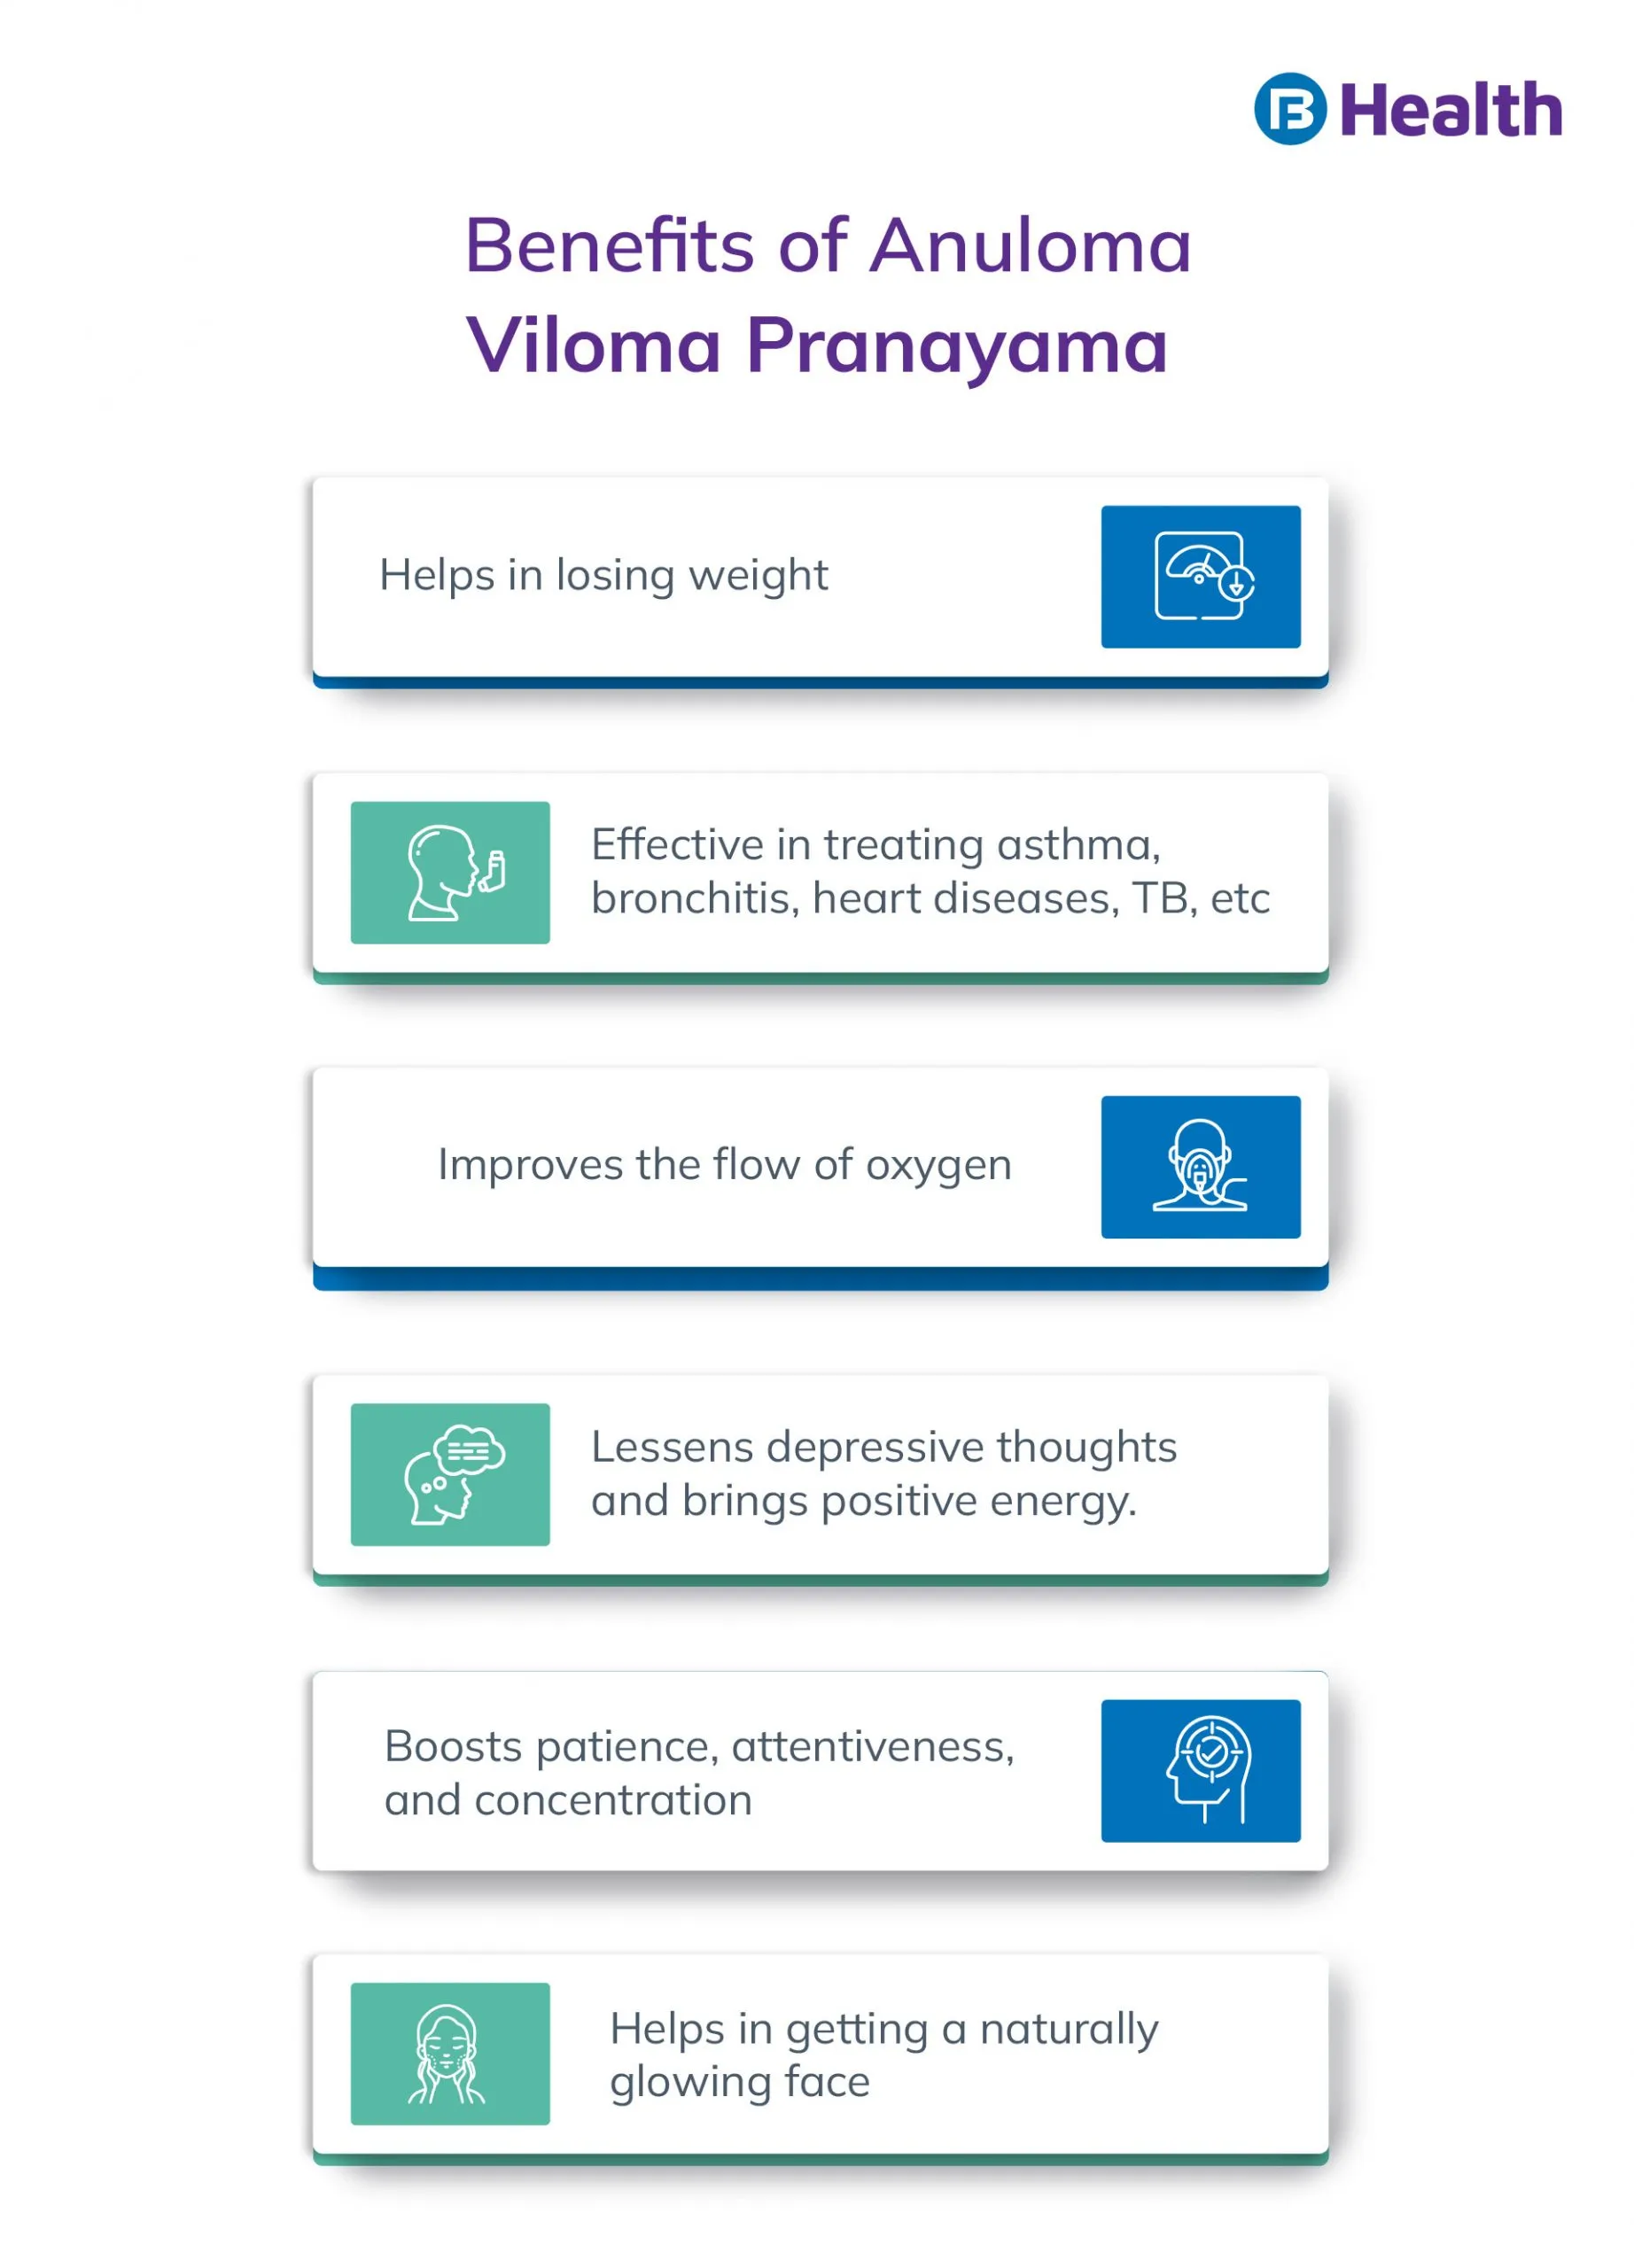 Anuloma Viloma Pranayama: Meaning, Steps and Benefits